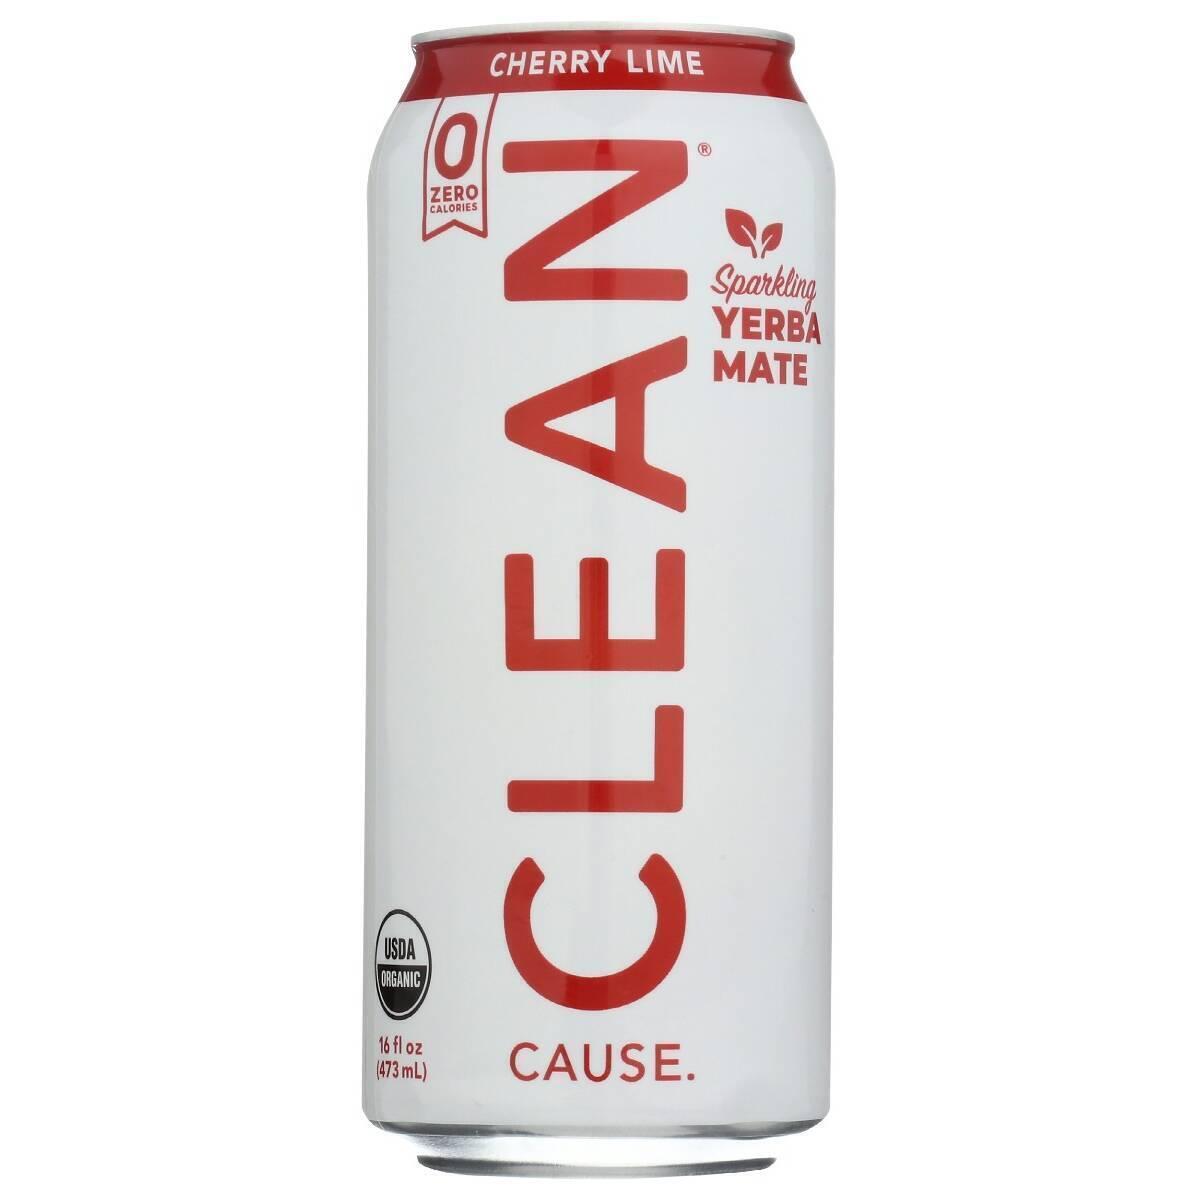 Clean Cause KHRM00363052 16 fl oz Cherry Lime Sparkling Yerba Mate